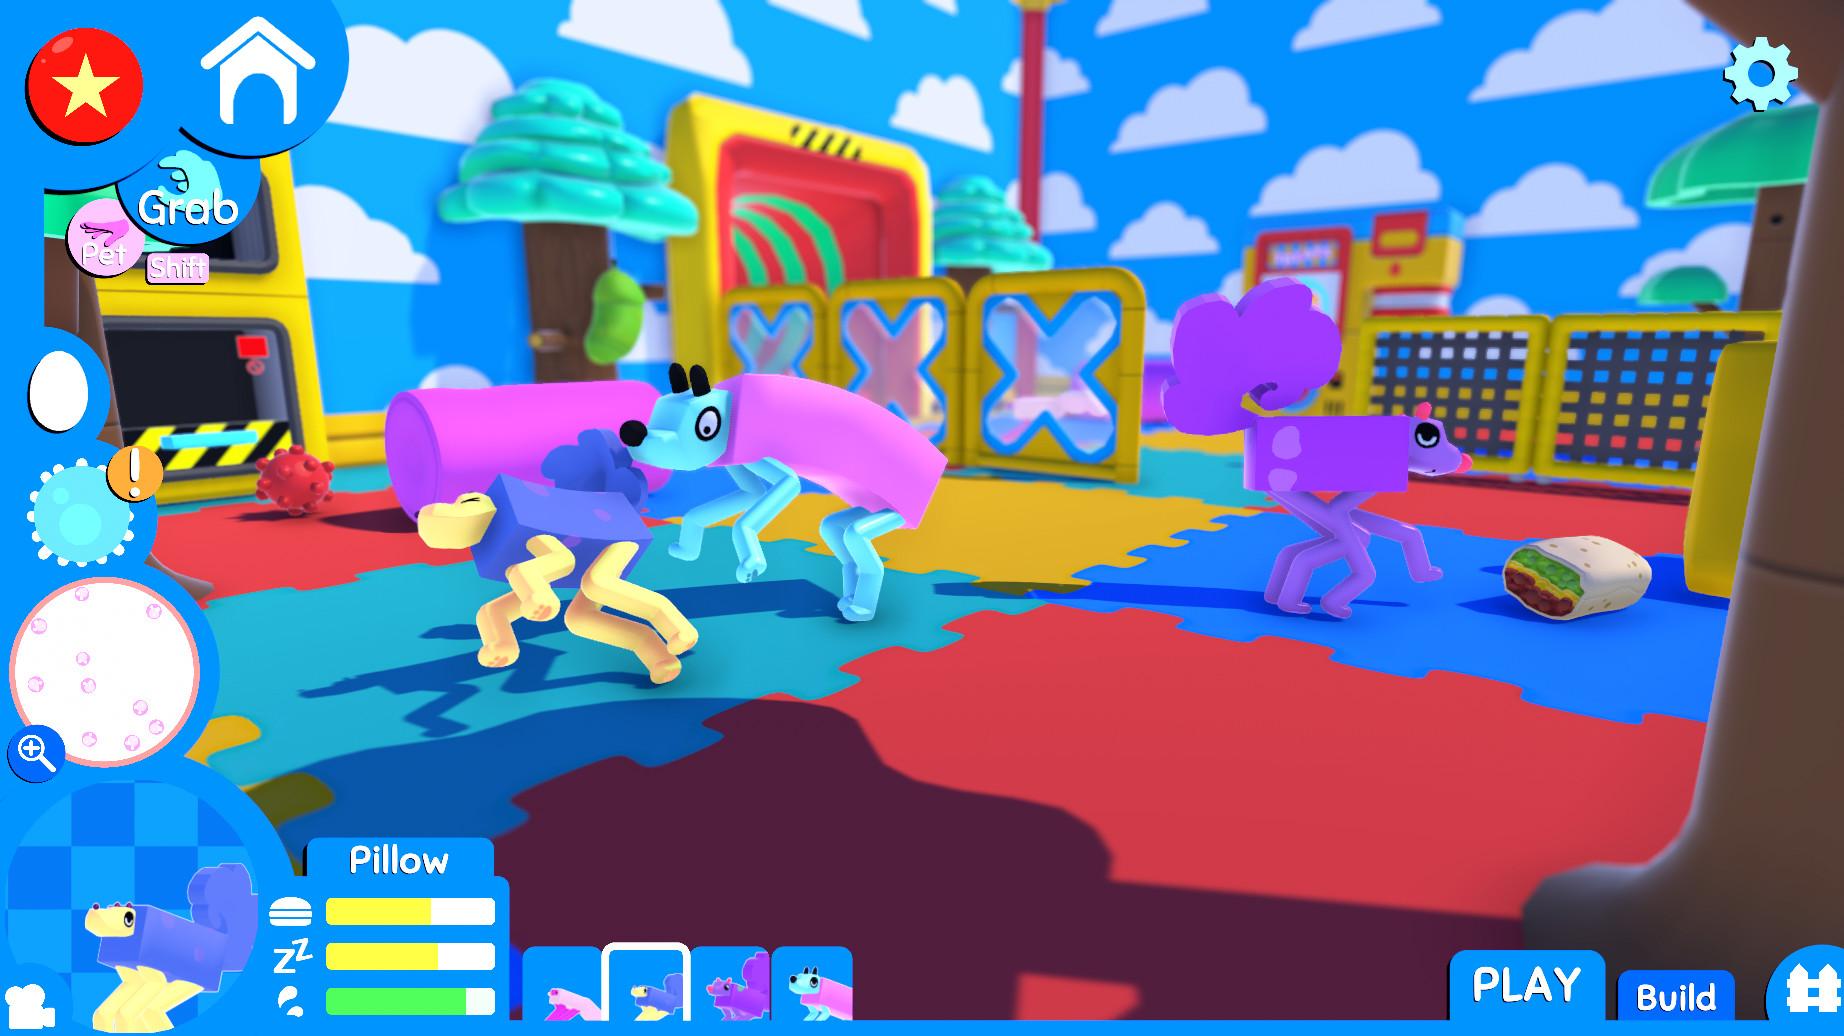 Screenshot №1 from game Wobbledogs